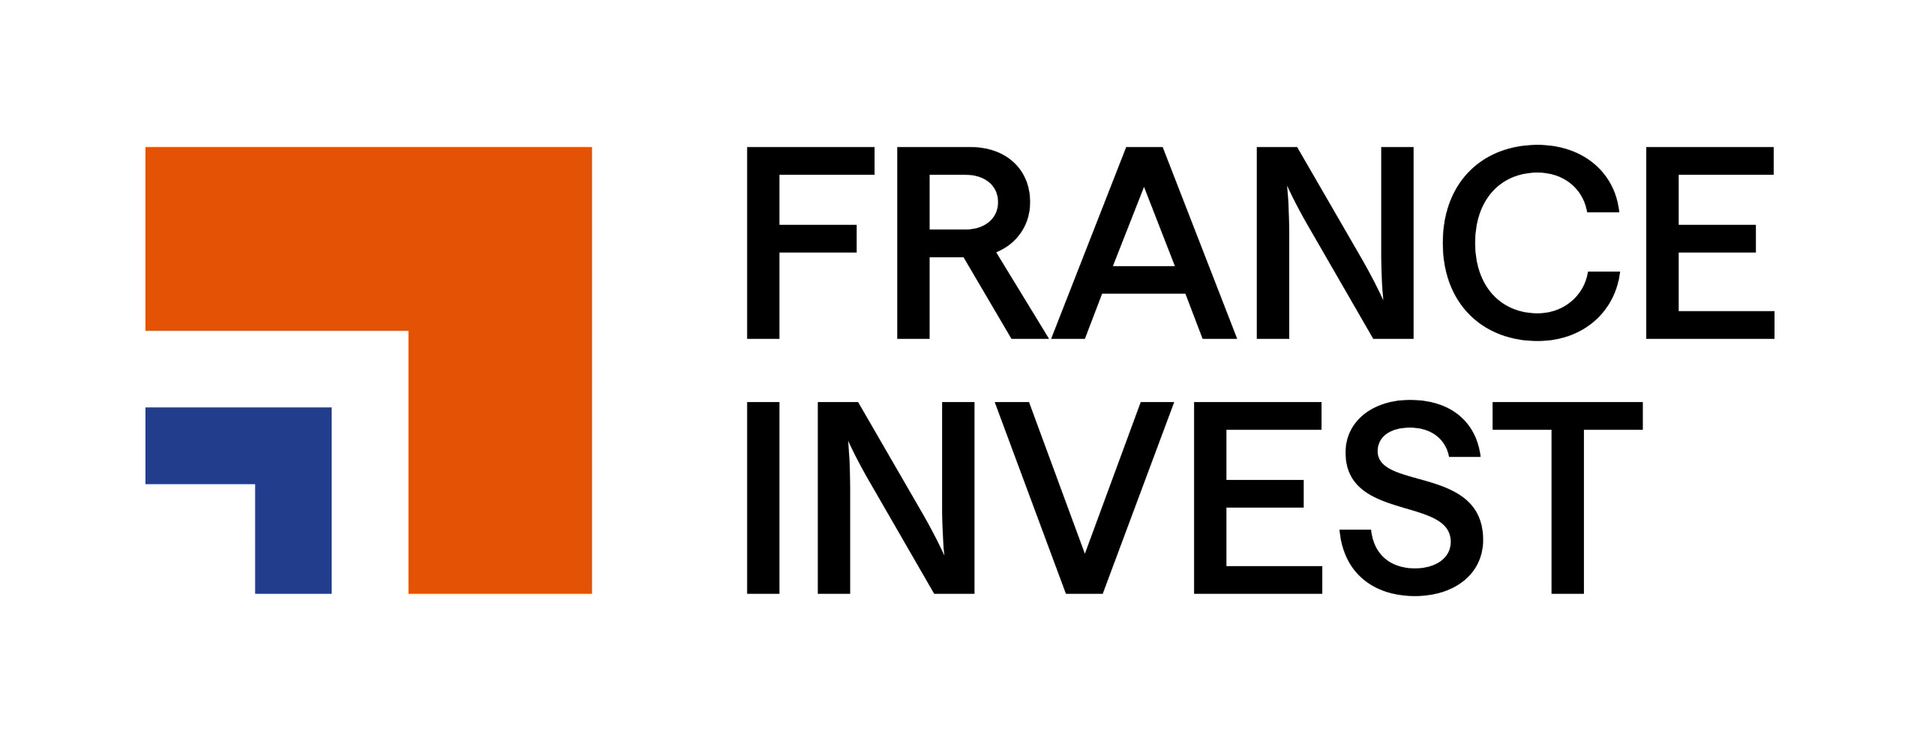 France Invest